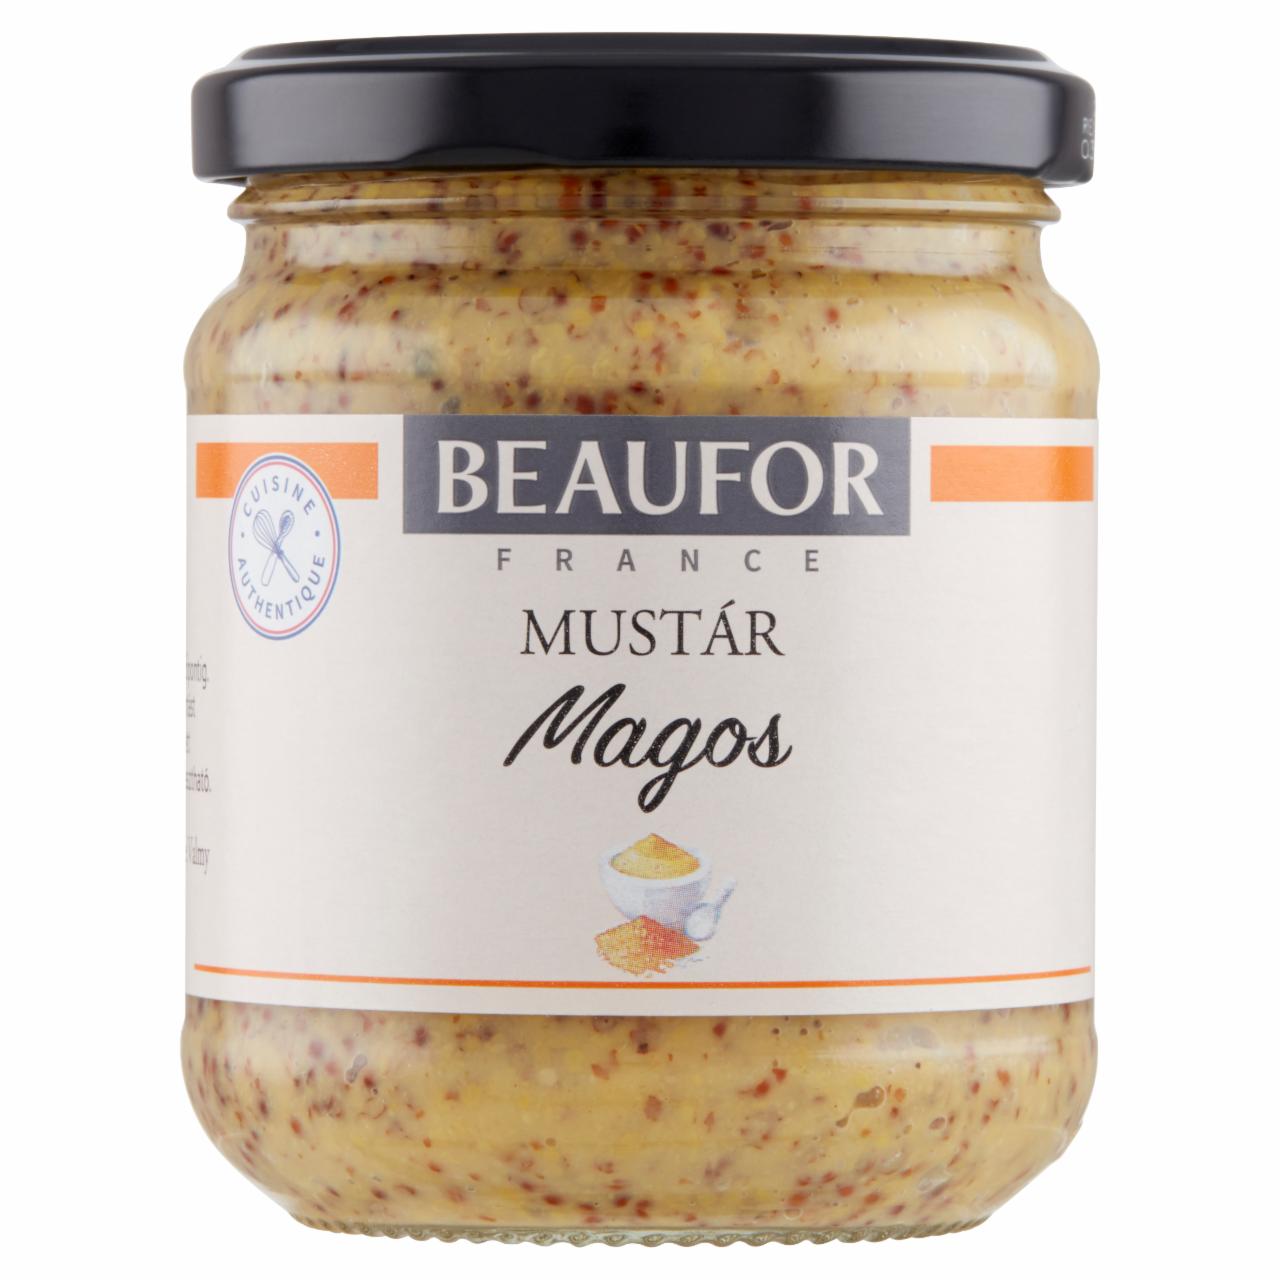 Képek - Beaufor magos mustár 200 g